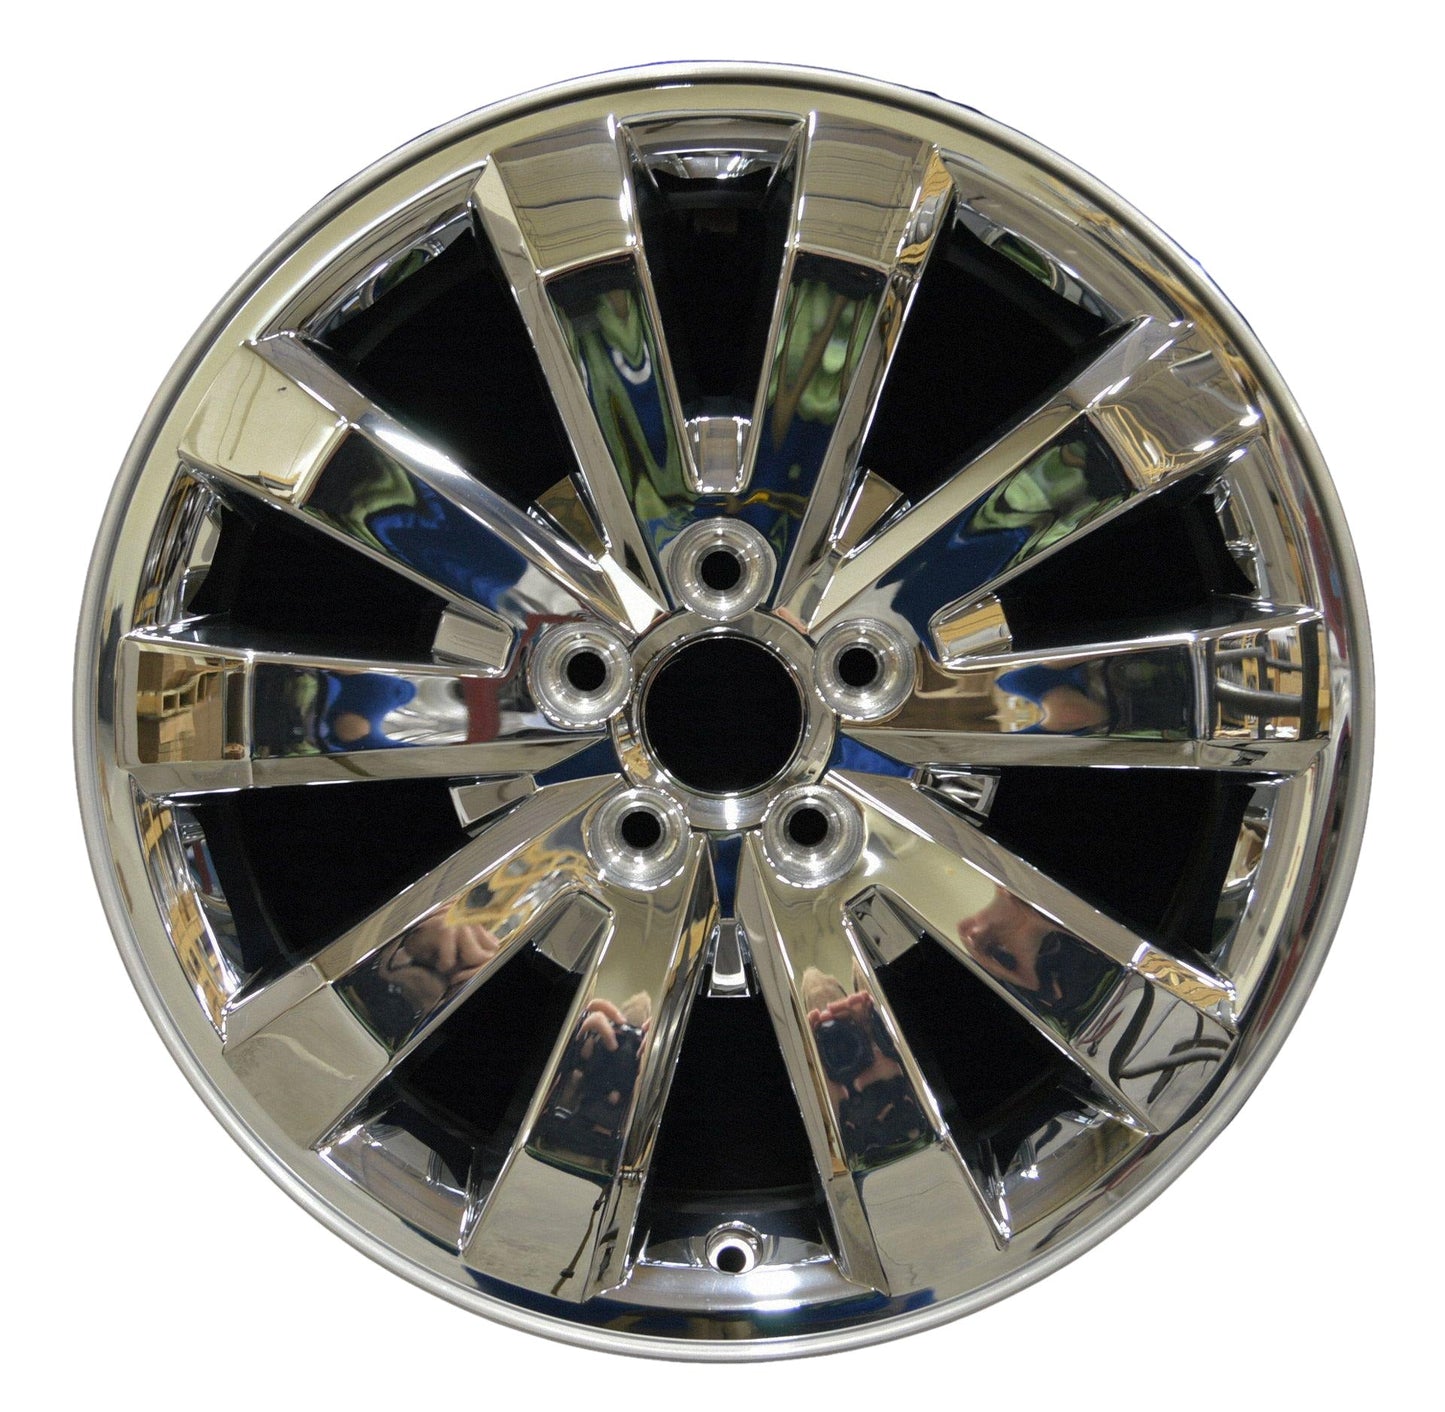 Ford Edge  2007, 2008, 2009, 2010, 2011, 2012 Factory OEM Car Wheel Size 18x7.5 Alloy WAO.3673.FULL.CHRC